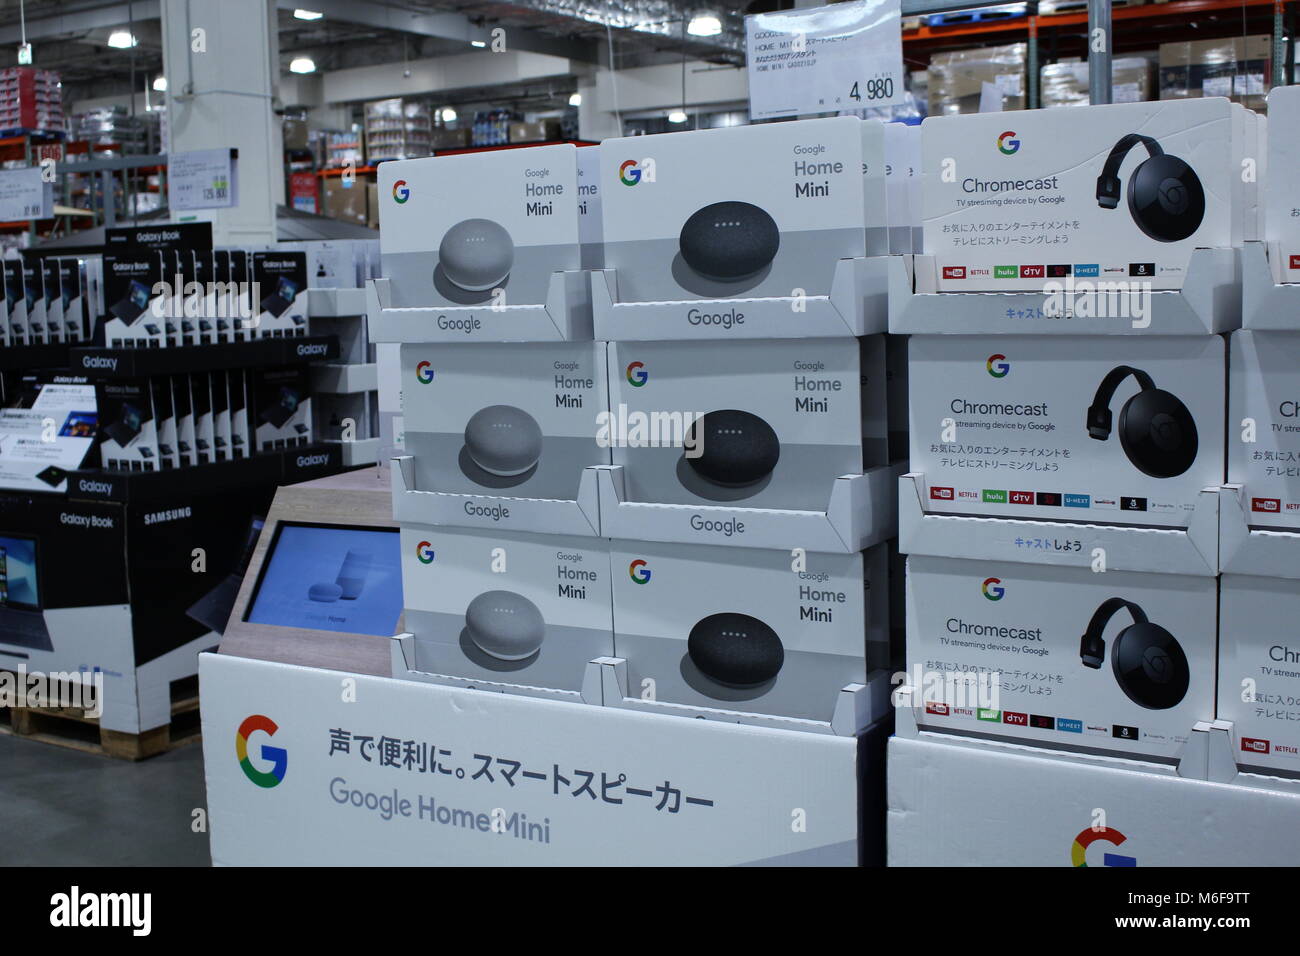 google home mini chromecast